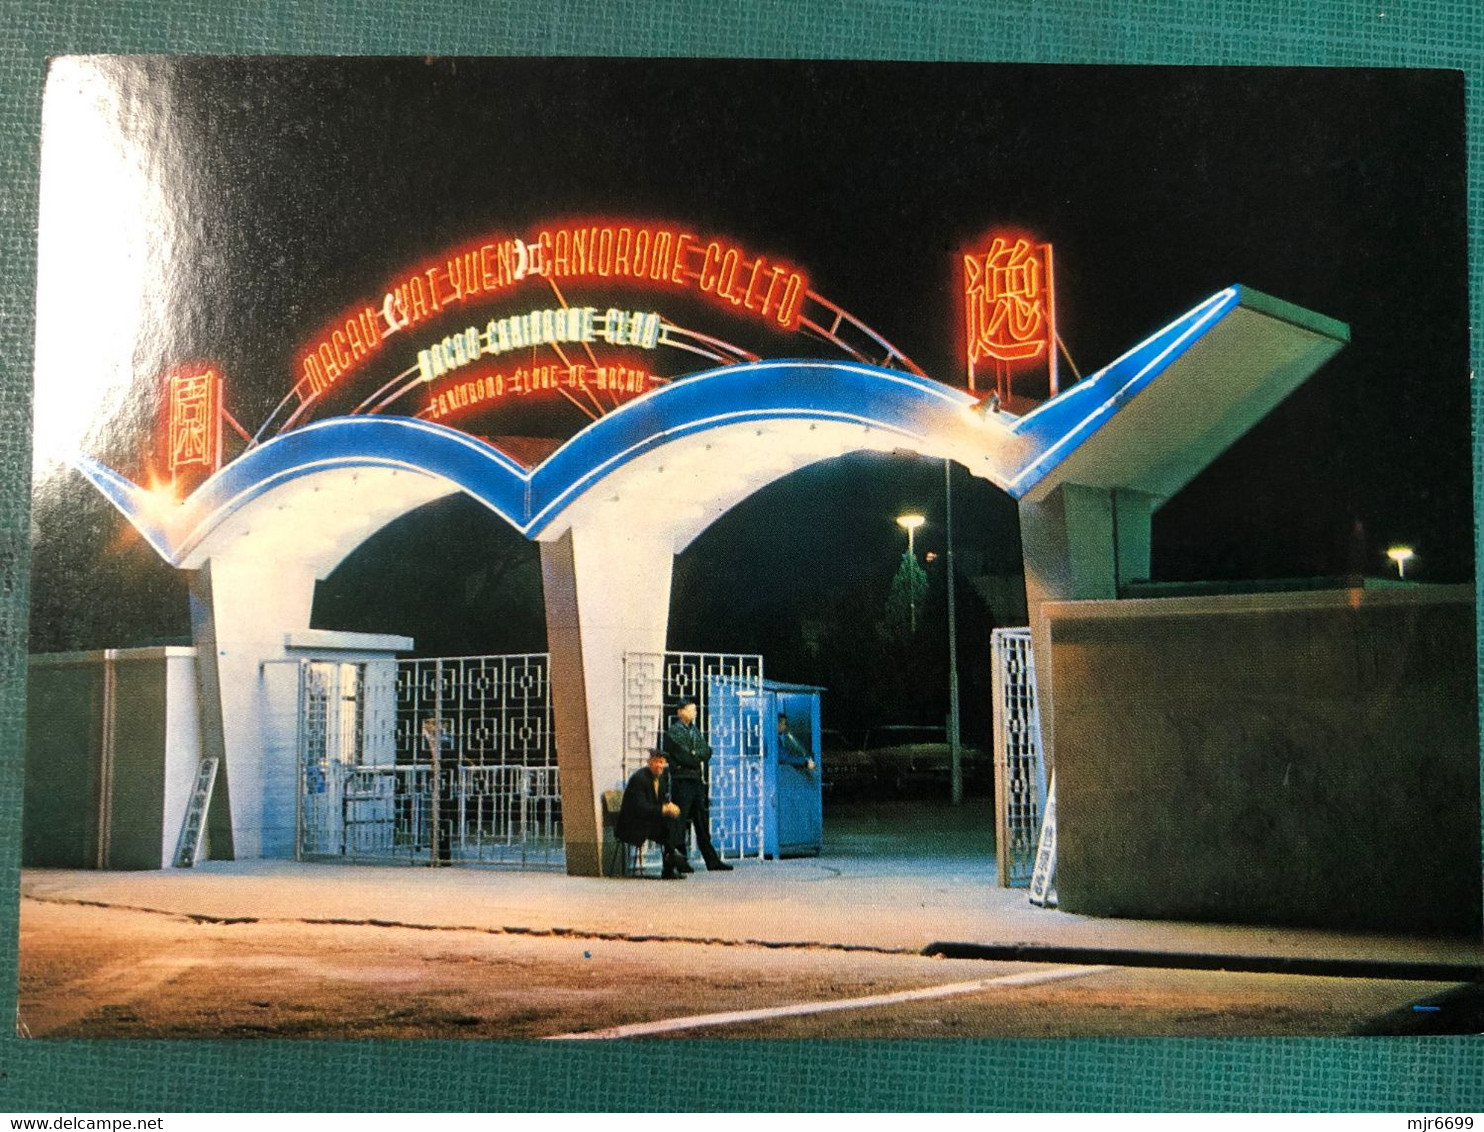 MACAU 1970'S, DOG RACING CANIDROME AT NIGHT, BOOK STORE PRINTING, SIZE 14,8 X 10CM, #206 - Macau